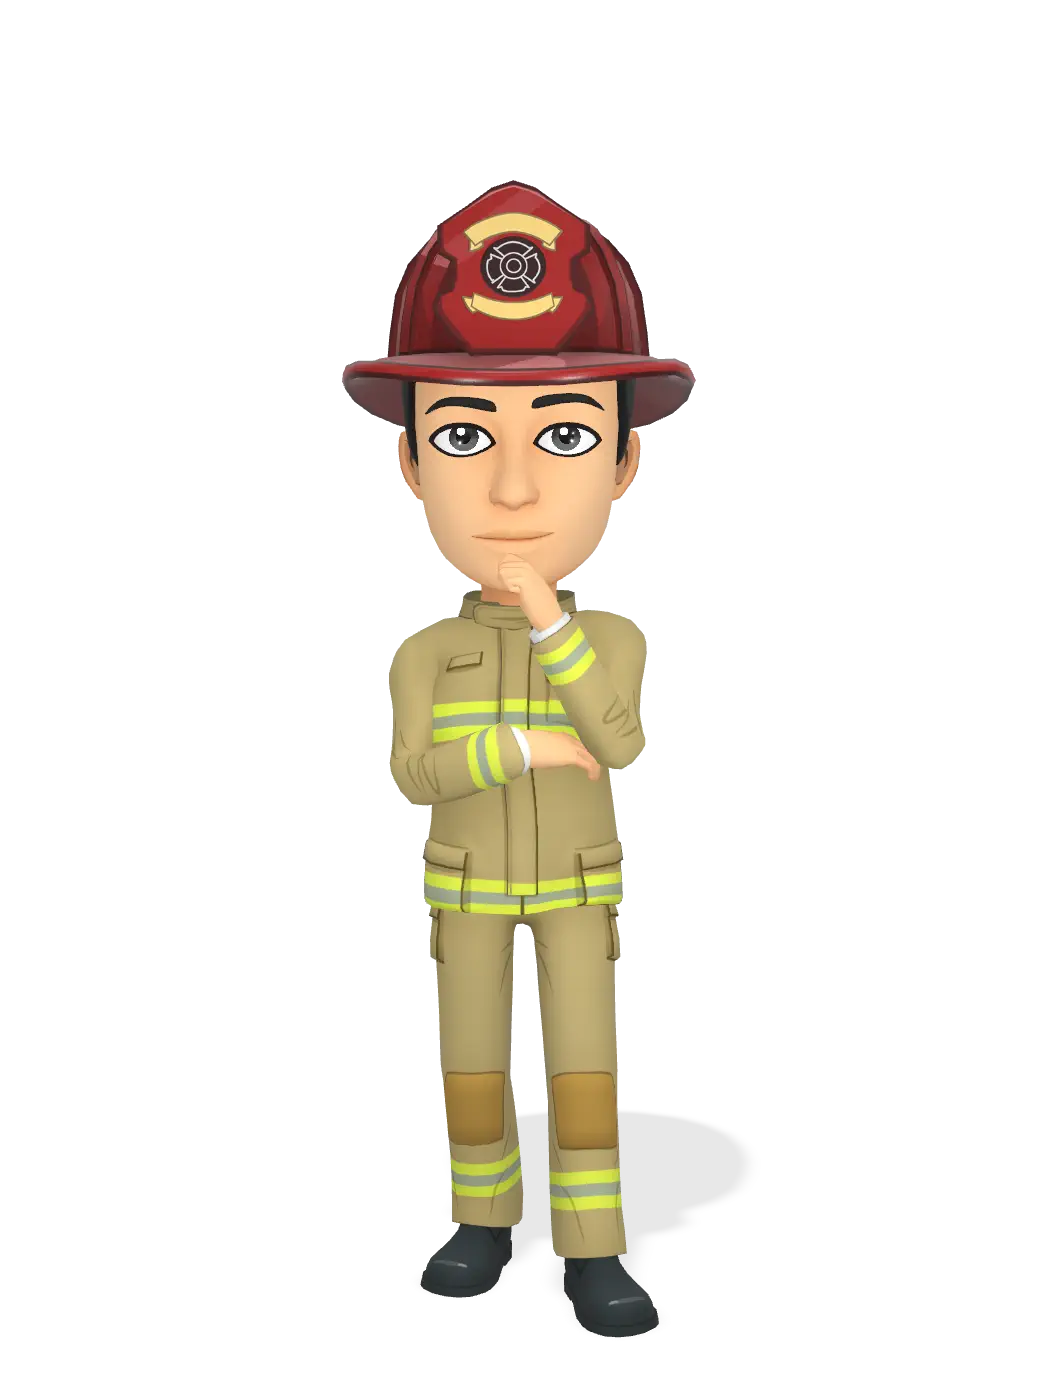 3D Bitmoji for pompiers_13